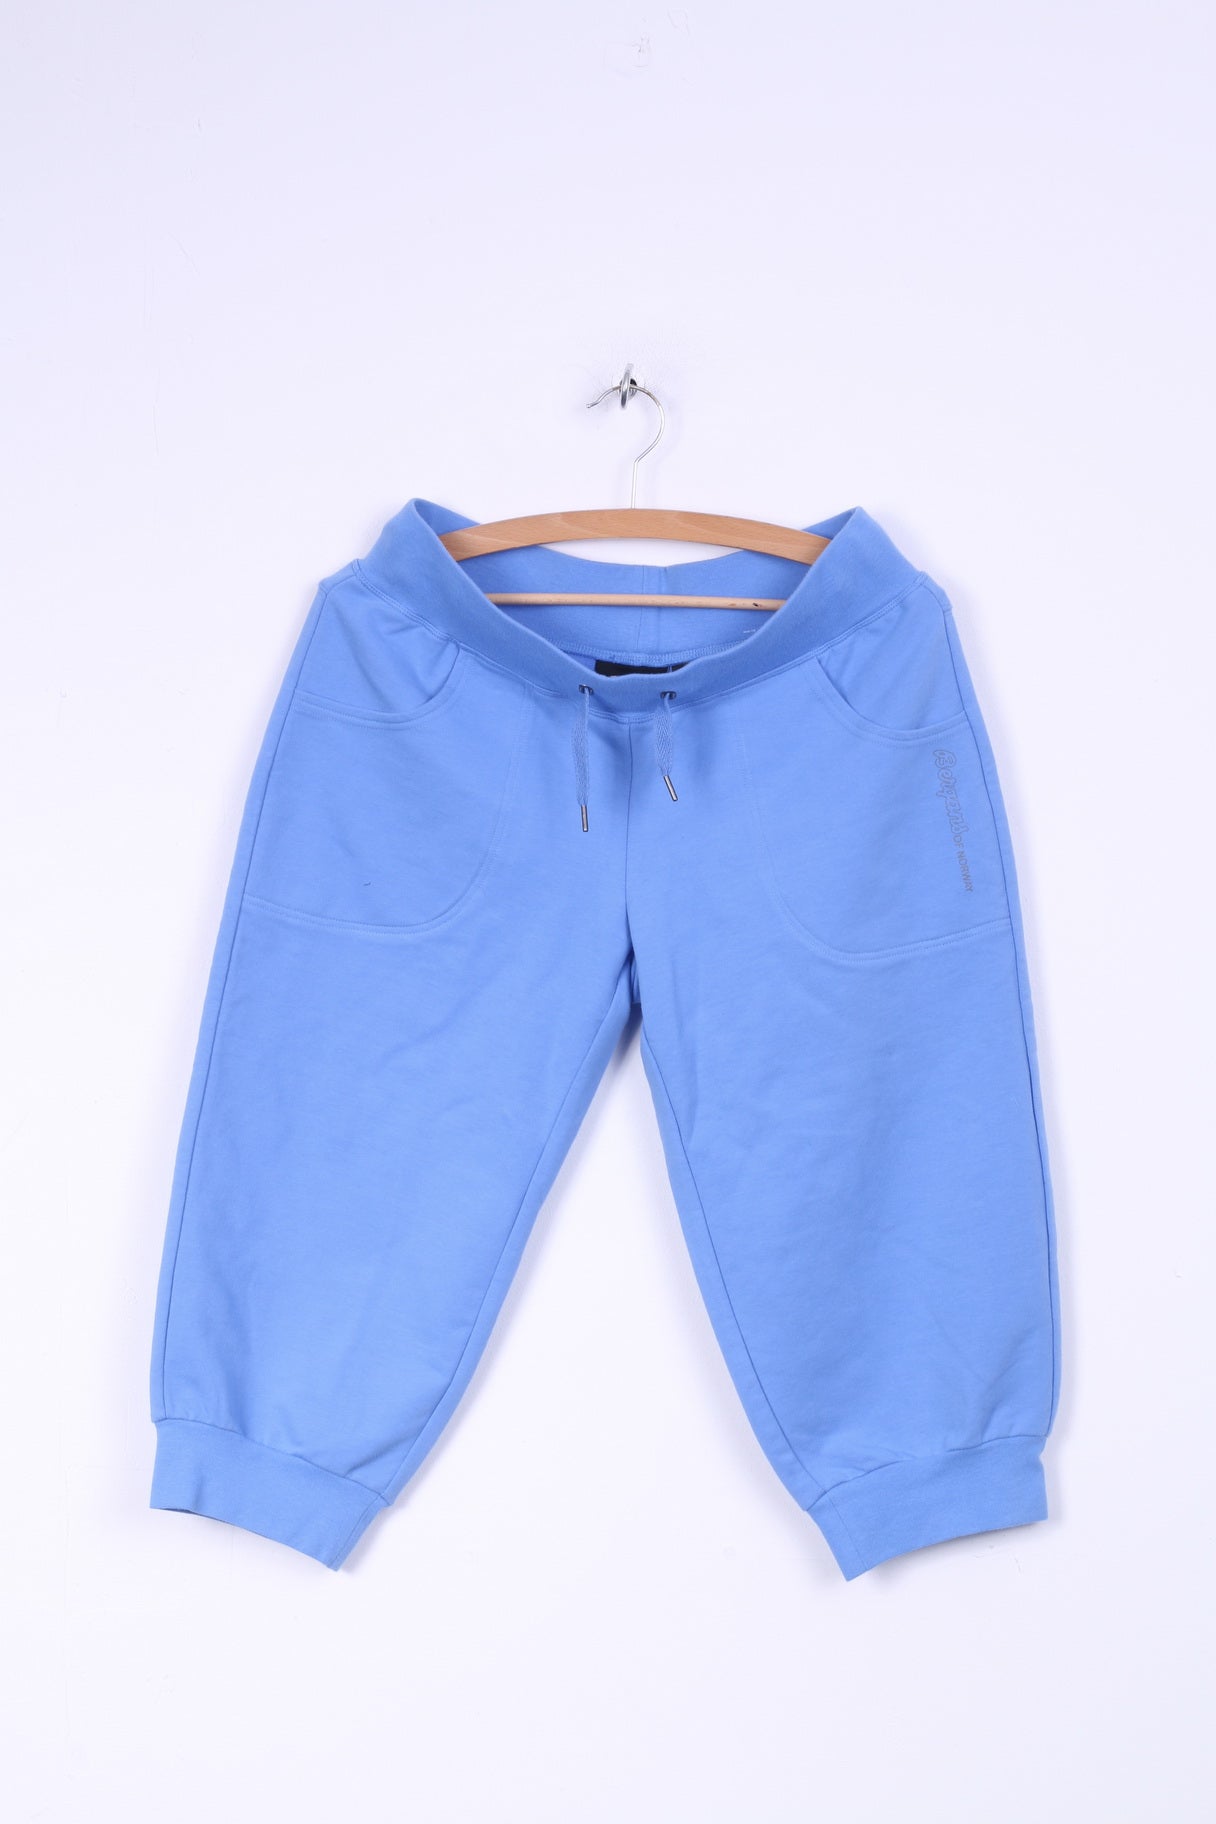 Bergans Womens M Capri Trousers Blue Cotton Sport Fana Lady Pants